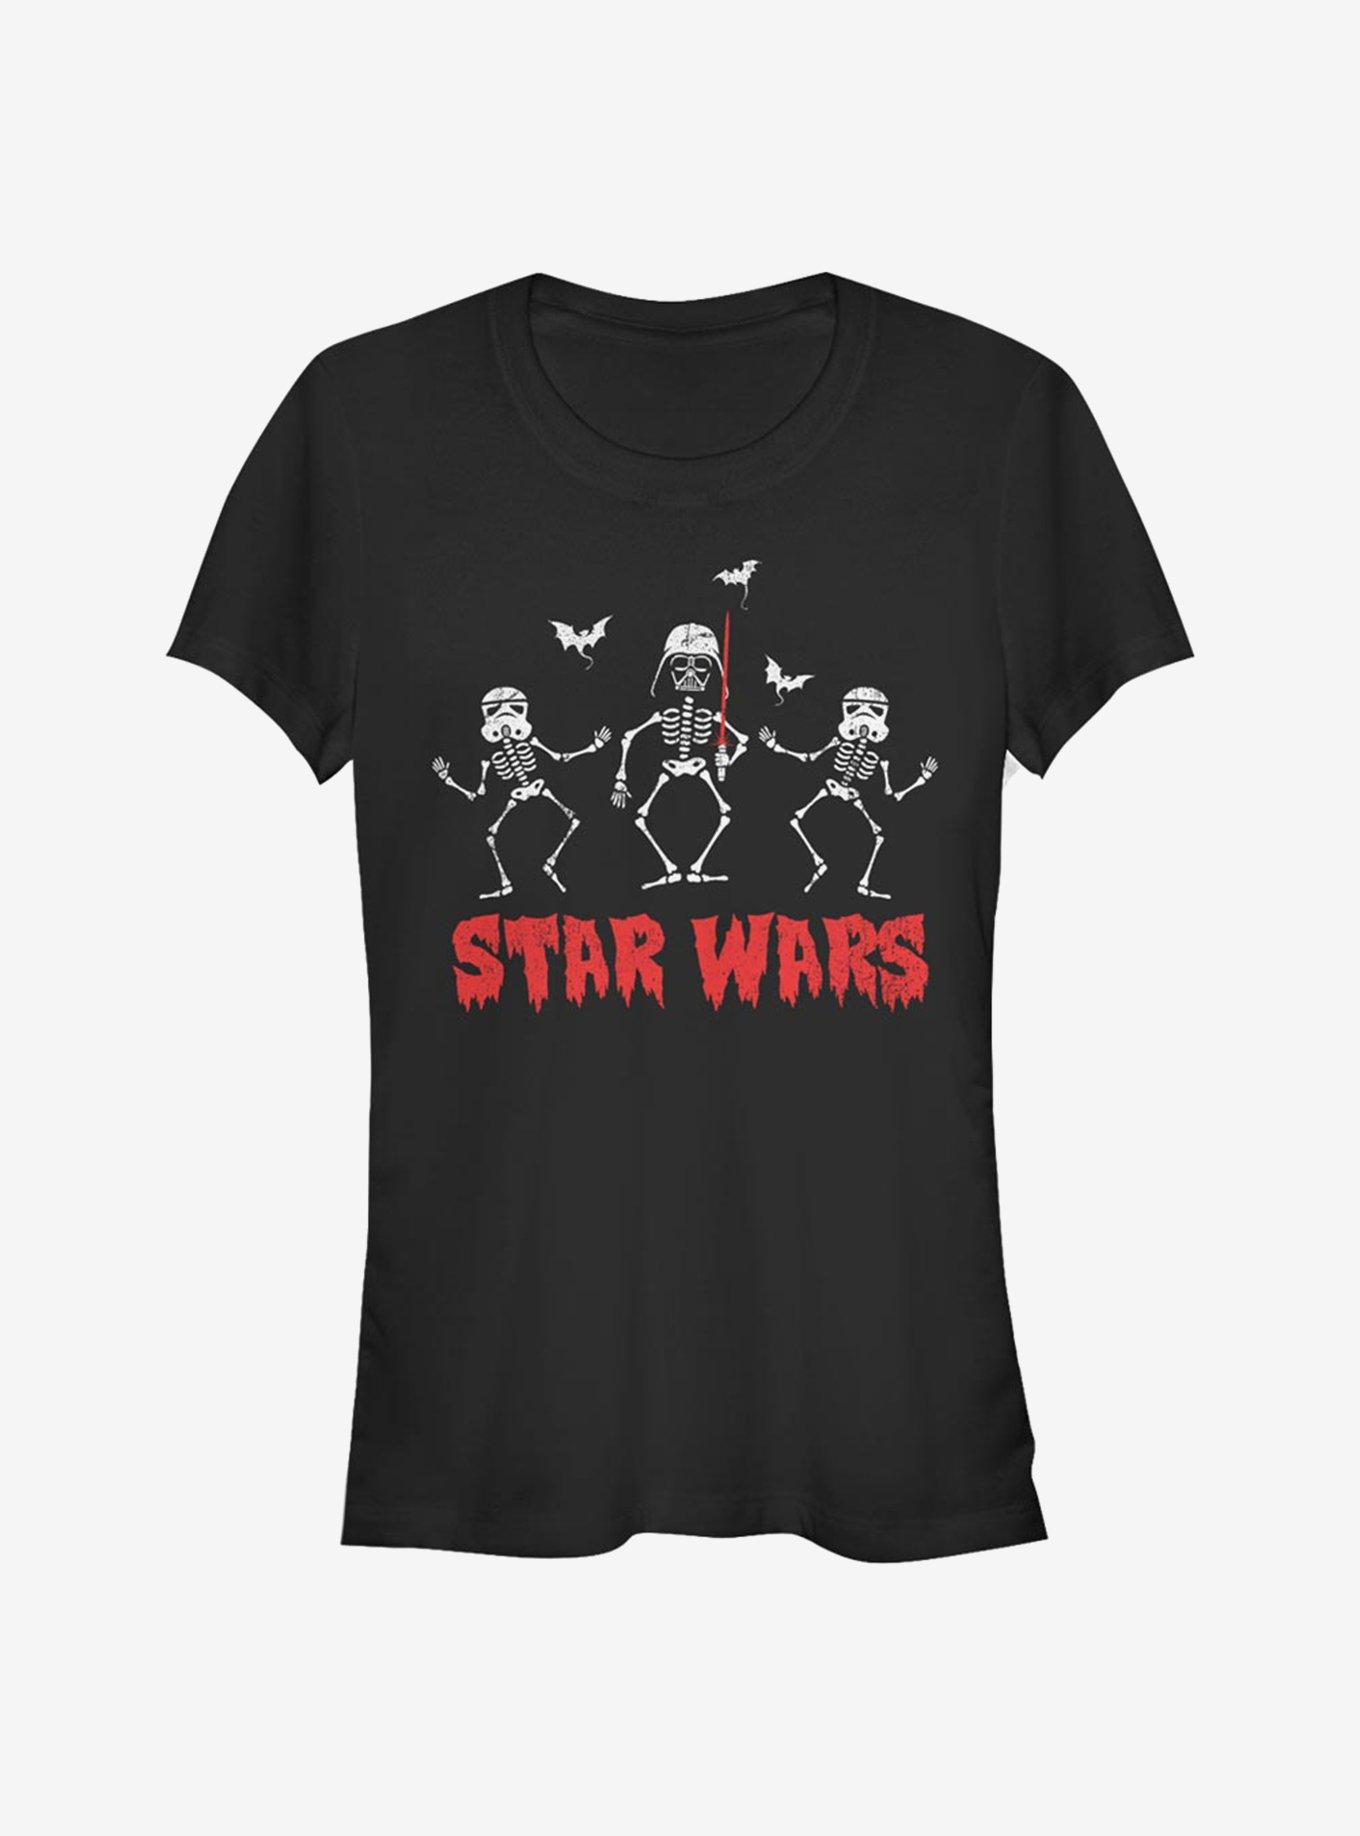 Star Wars Creep Girls T-Shirt